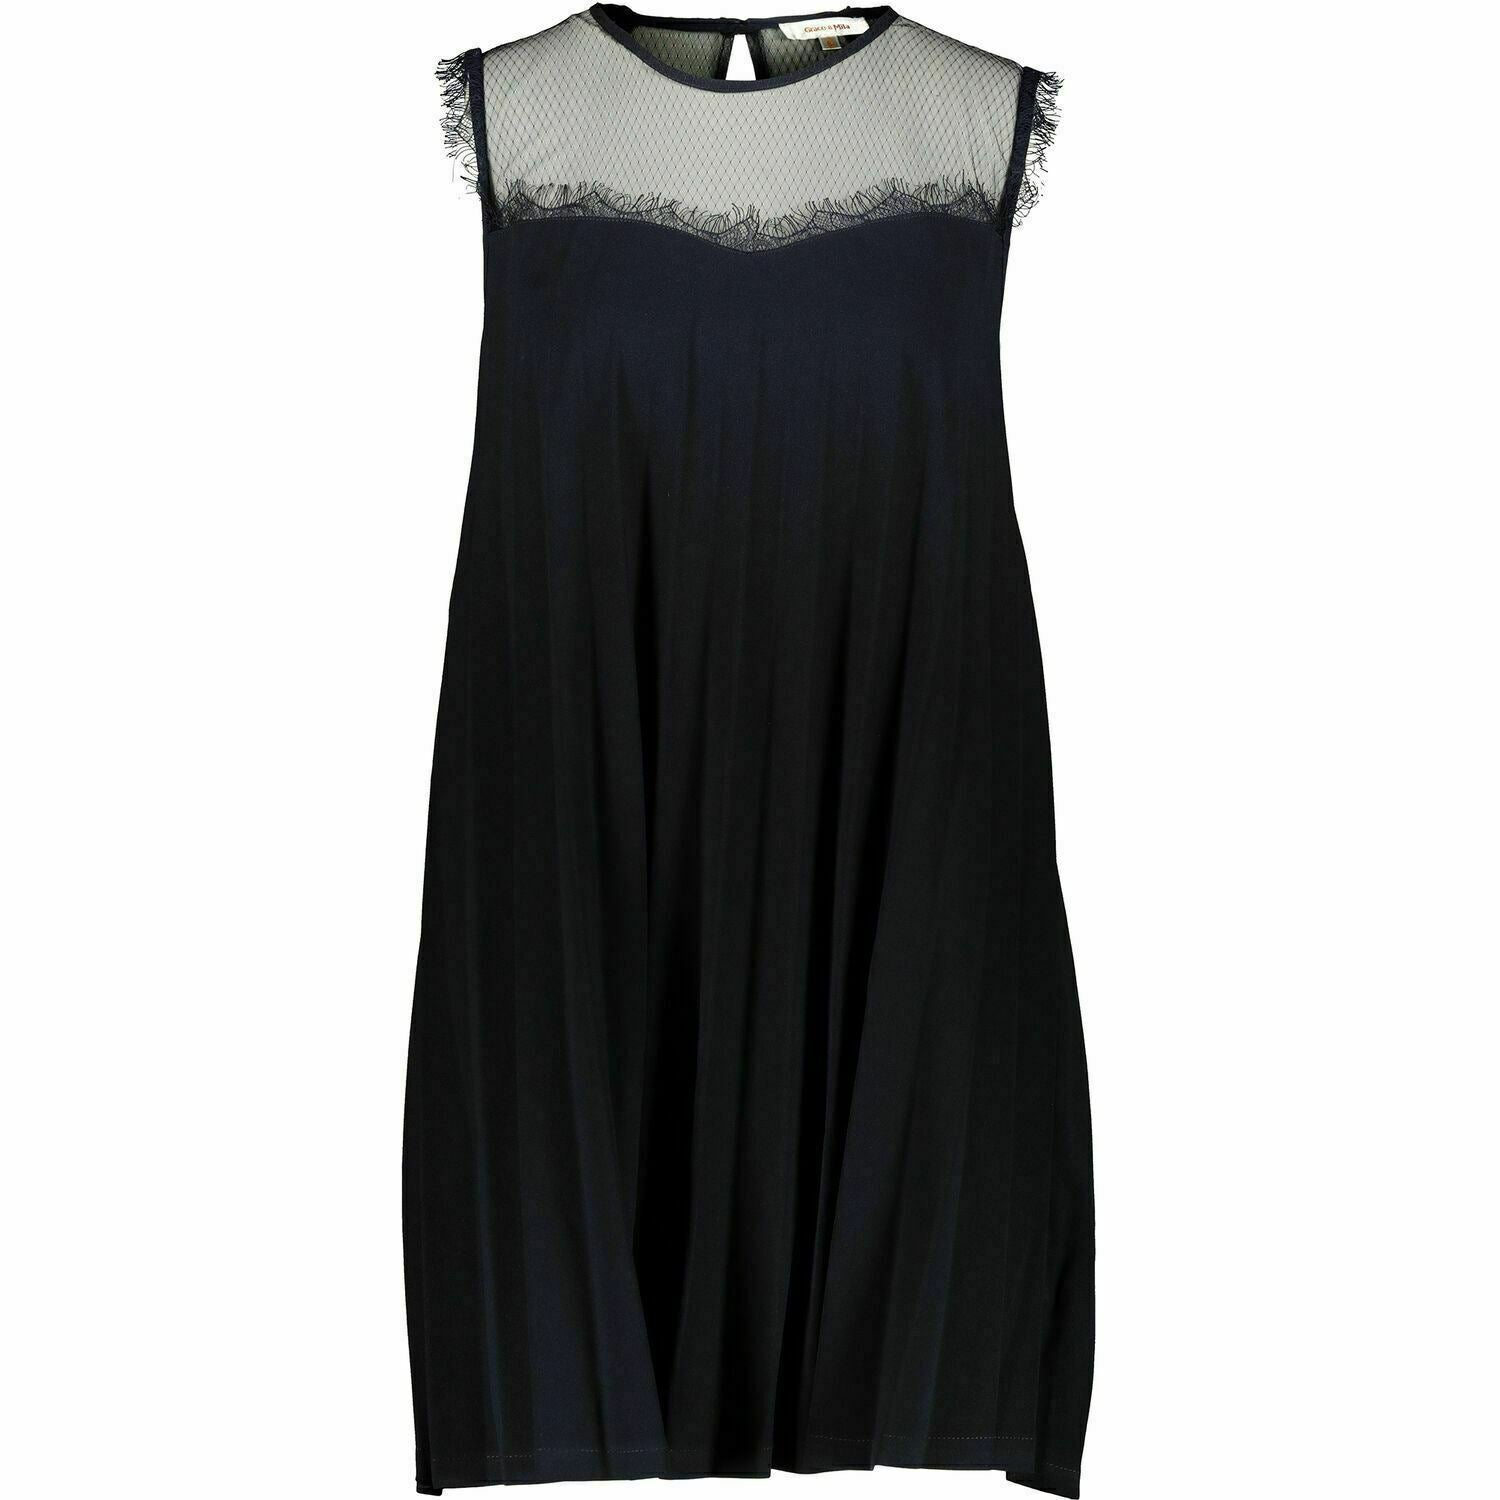 GRACE & MILA Women's Plisse Shift Dress, Navy Blue, size SMALL / UK 10